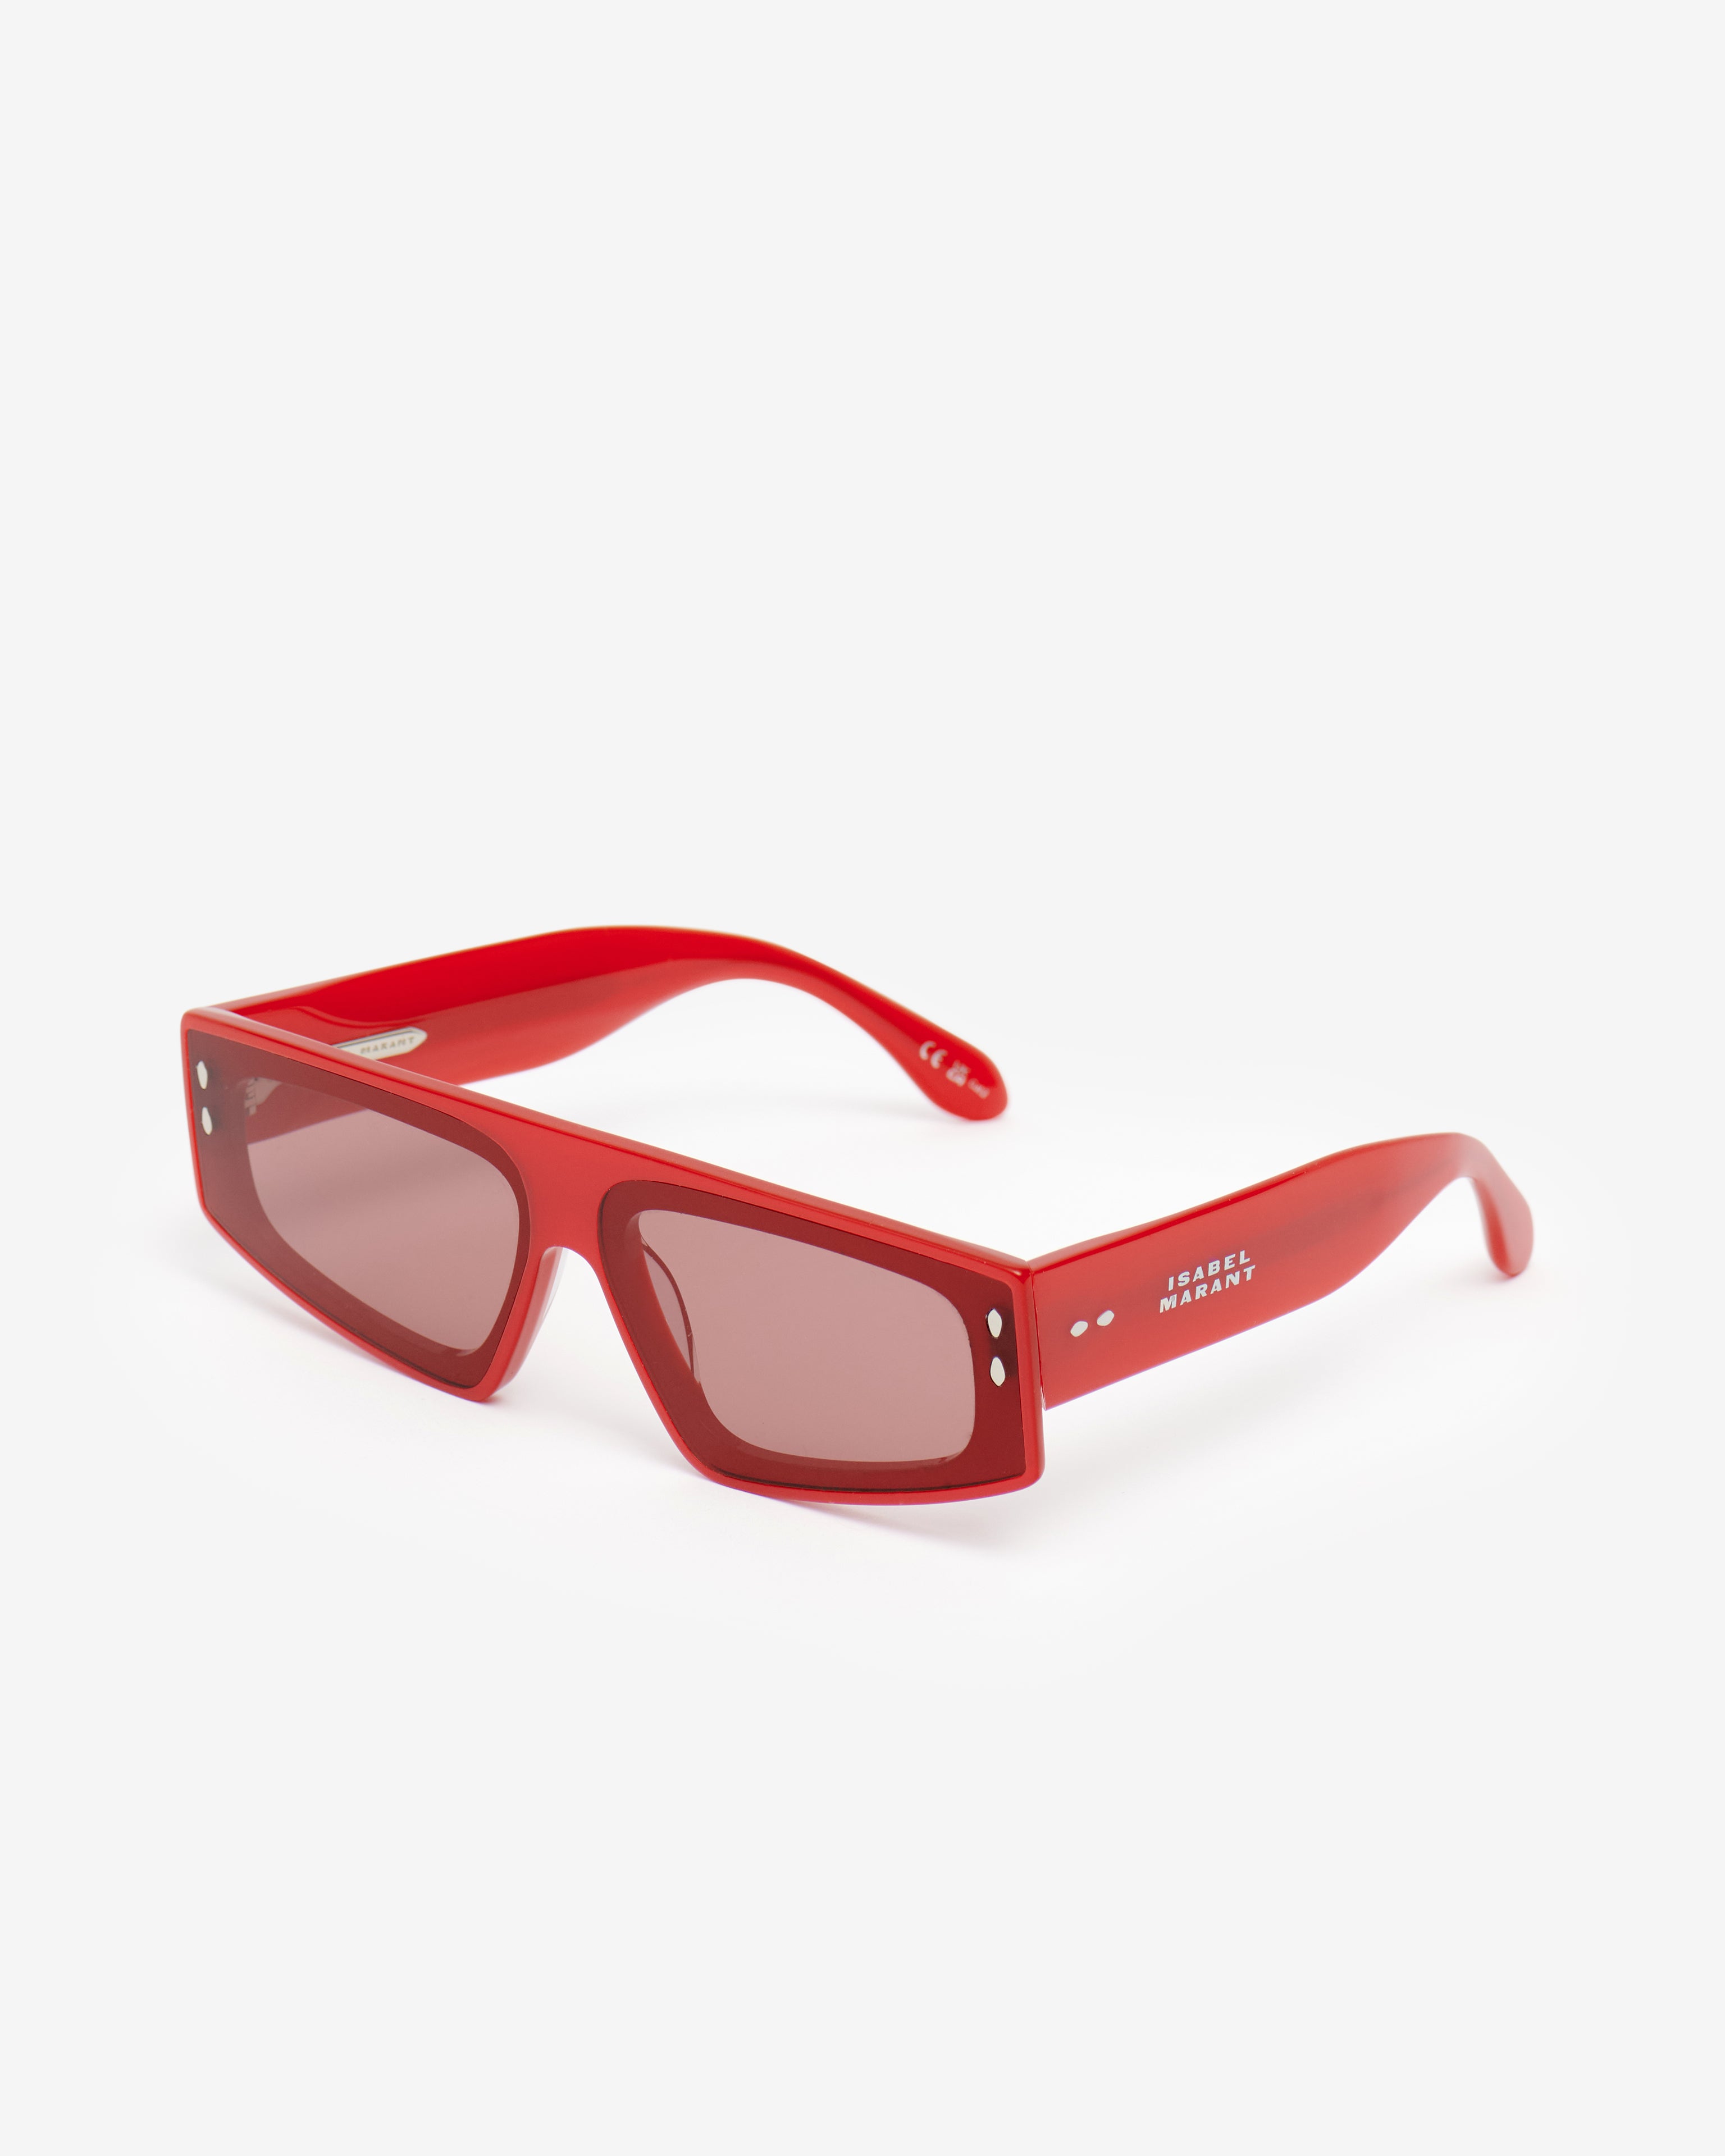 Gafas de sol zoomy Woman Pearled red-burgundy 3